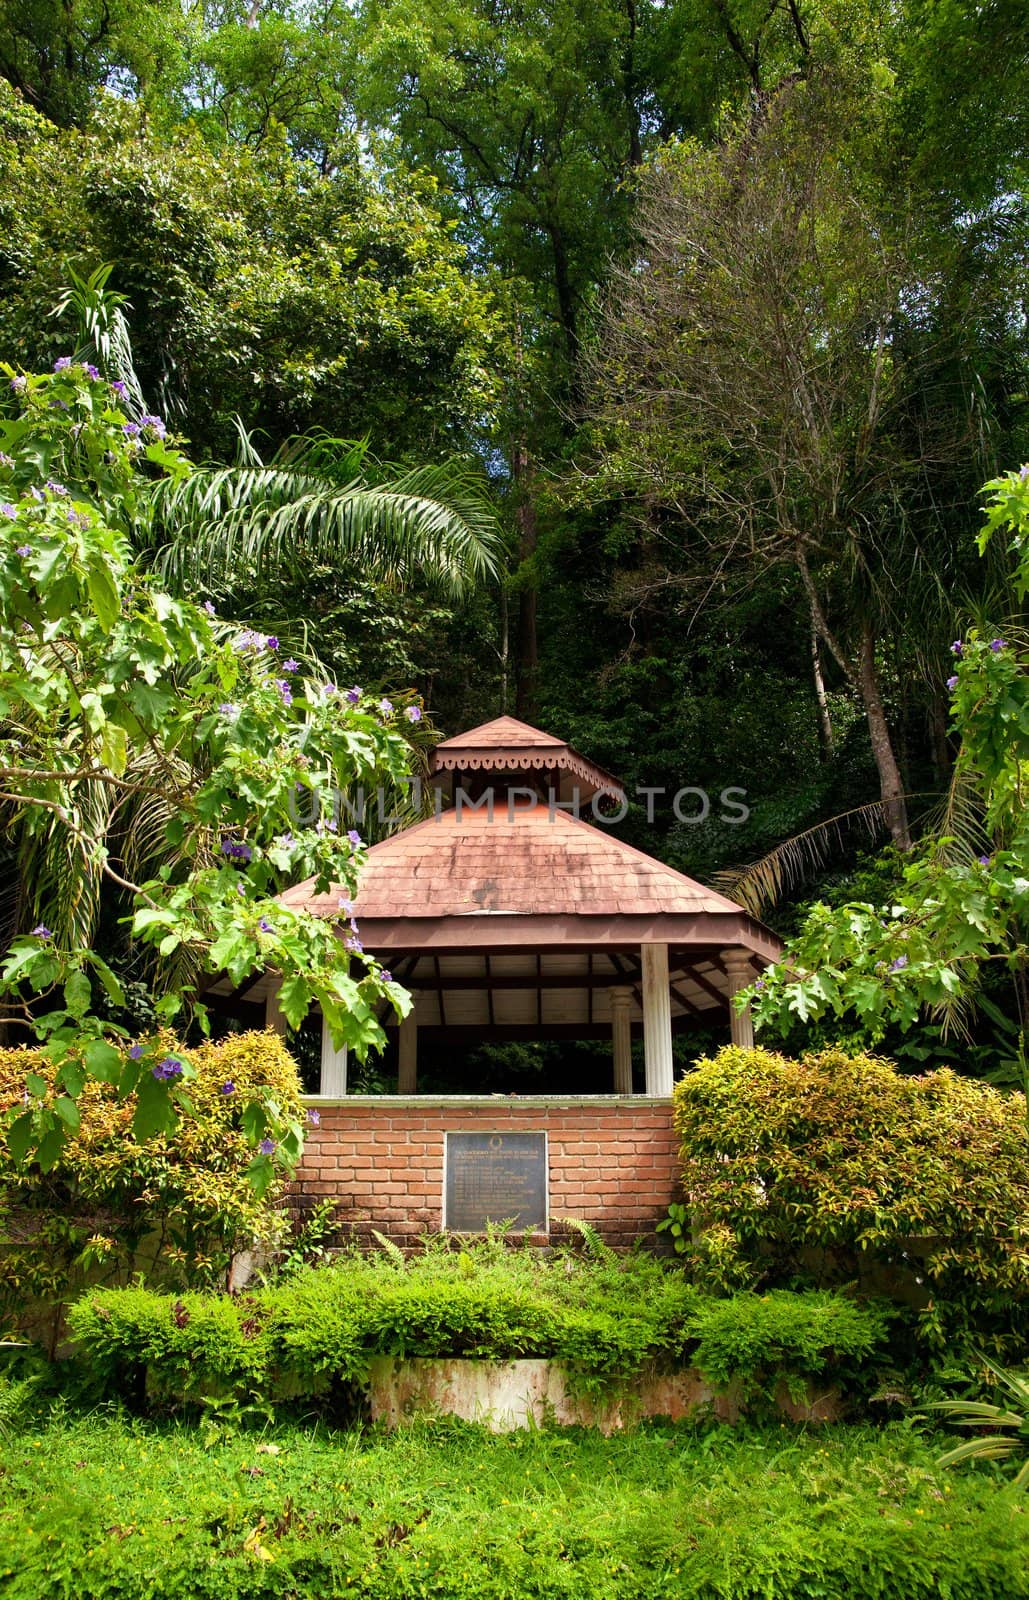 pagoda or rotunda in garden by clearviewstock